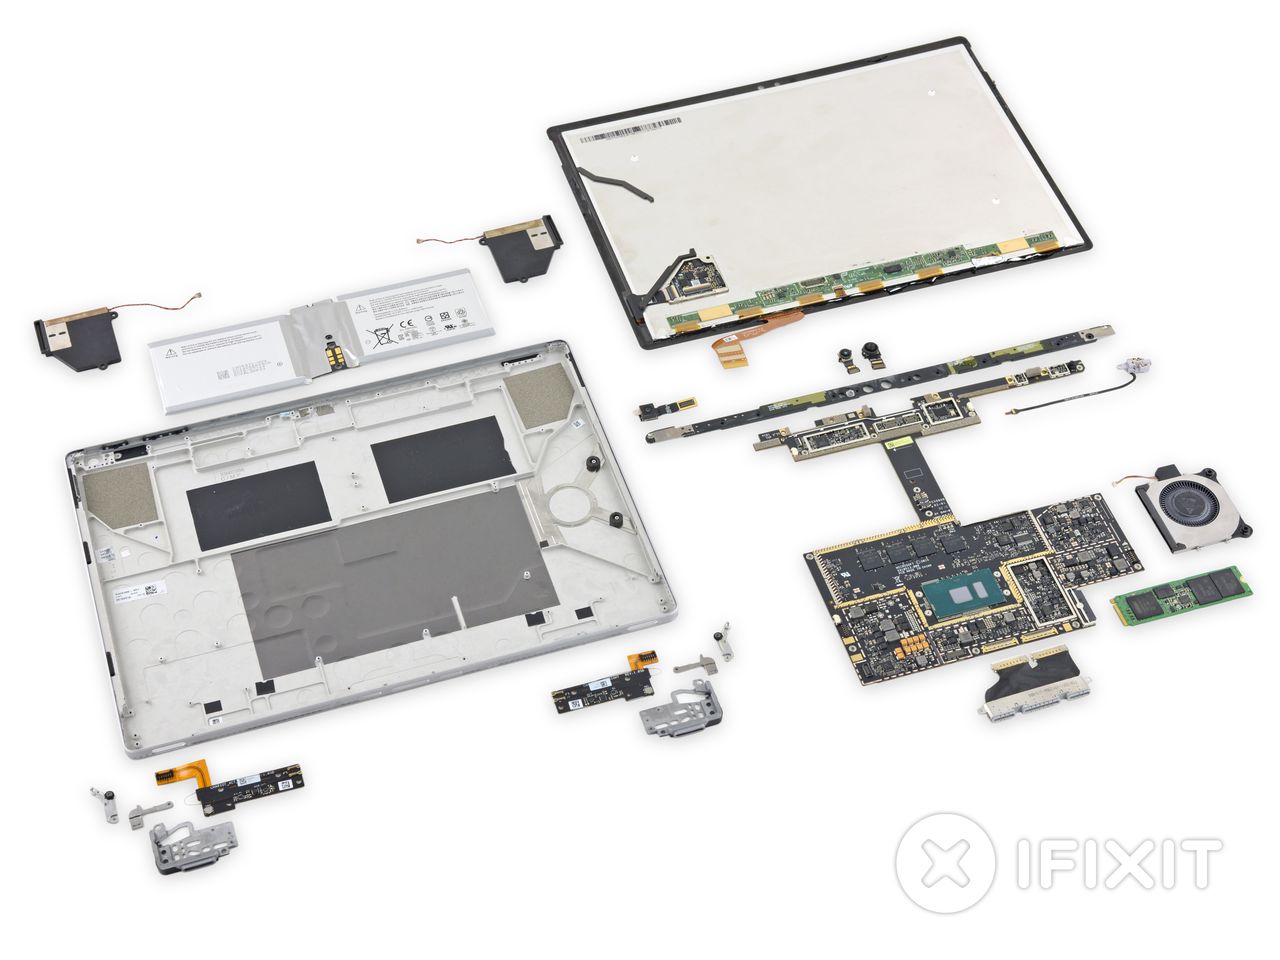 Podstawowe komponenty SurfaceBooka